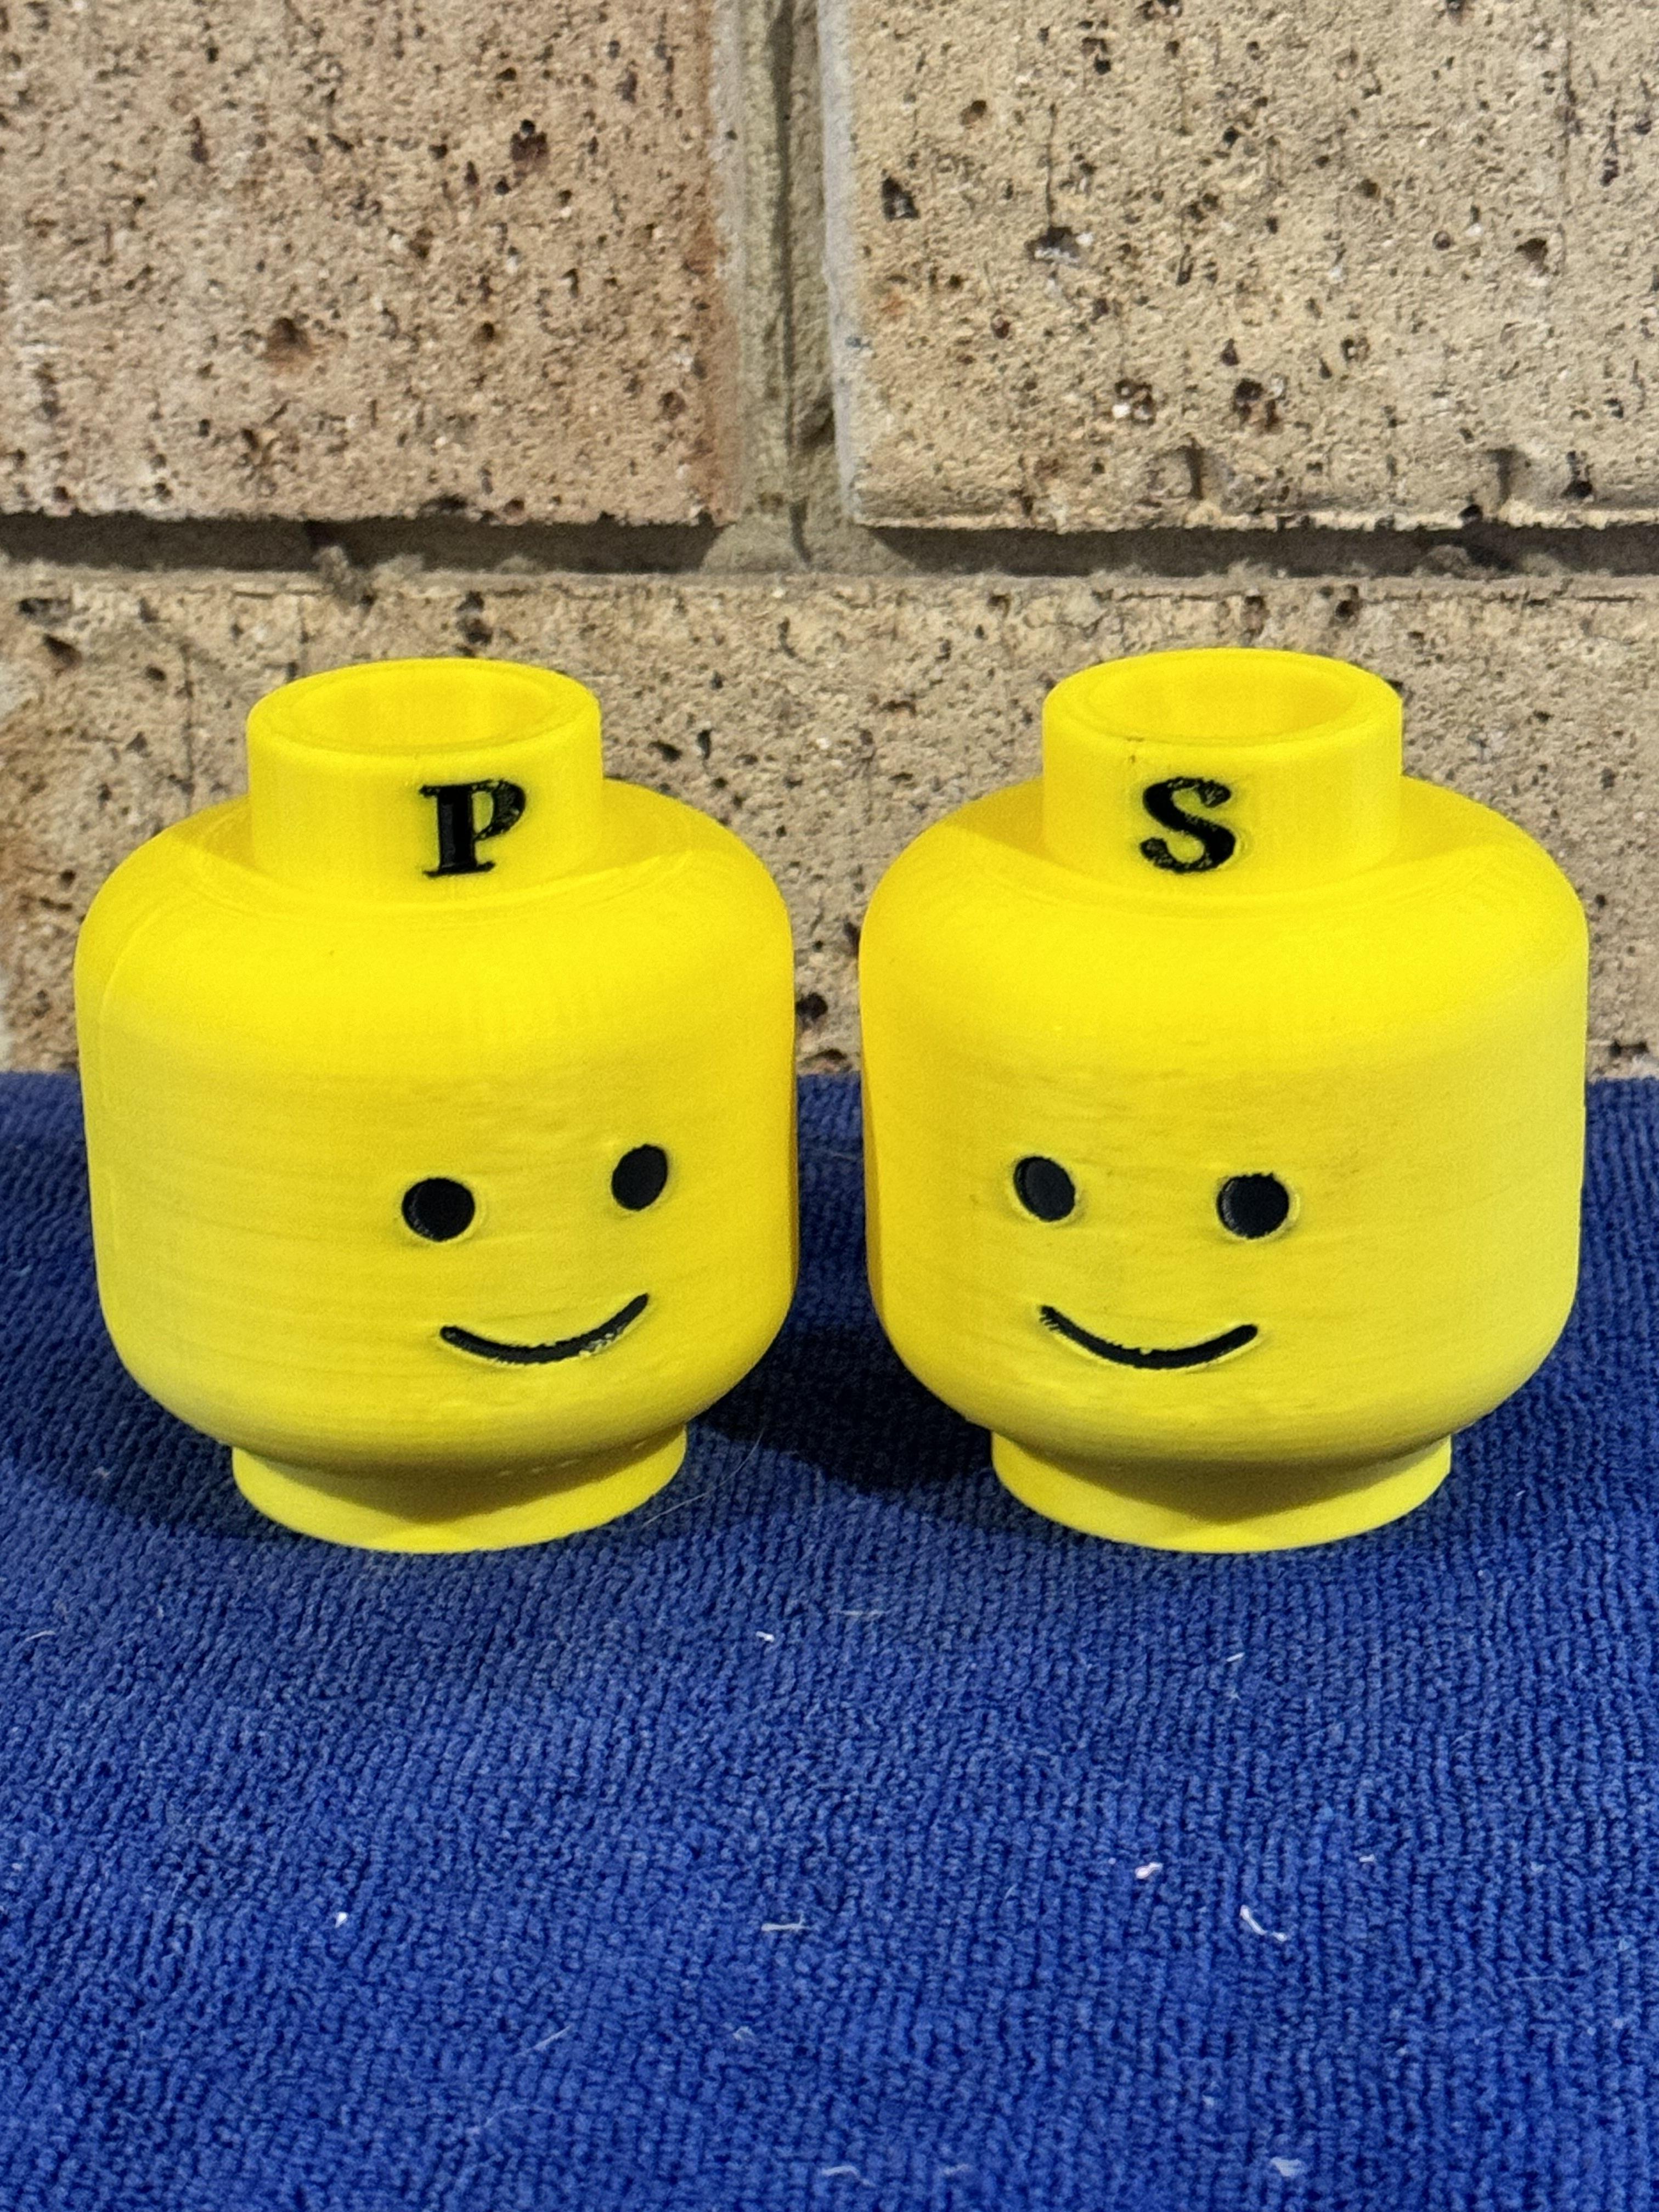 Lego Salt and pepper shakers 3d model